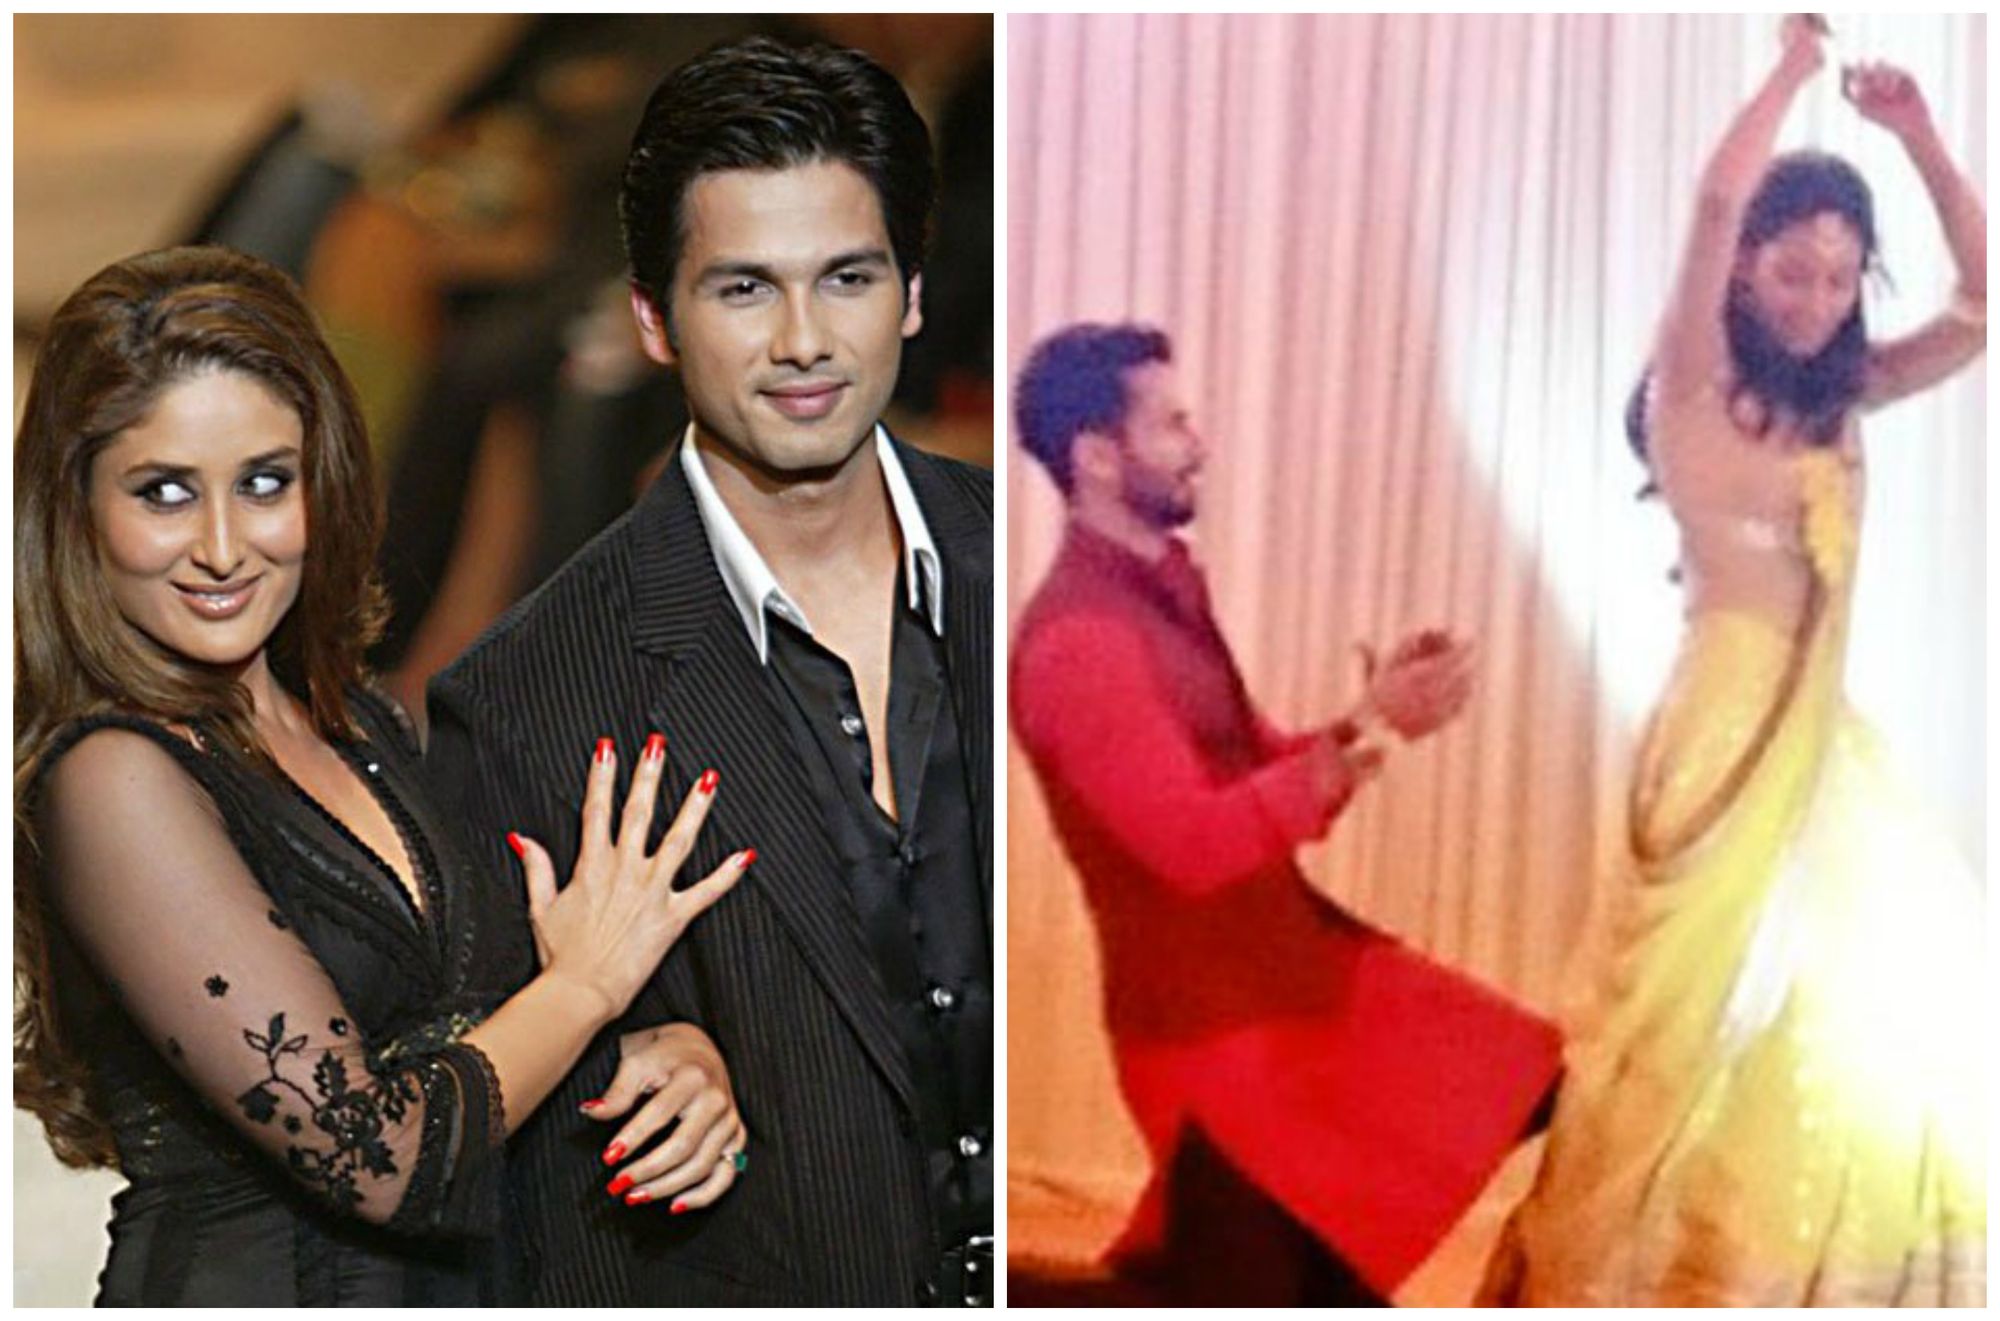 “Don’t Turn It Into A Soap Opera” – Kareena Kapoor On Shahid Kapoor’s Wedding!